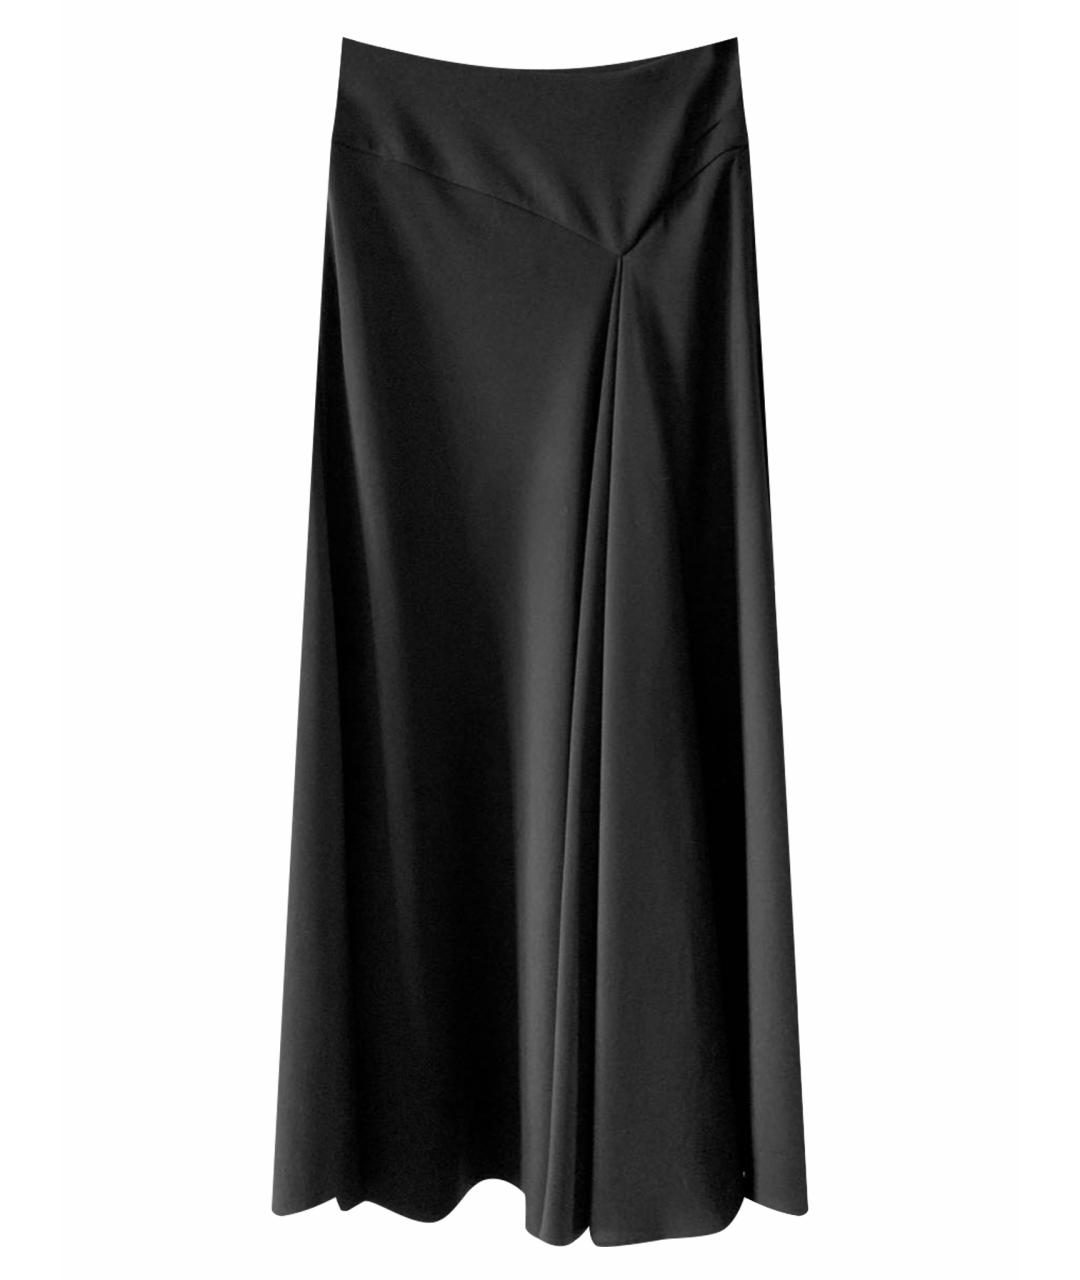 ARMANI COLLEZIONI Черная полиэстеровая юбка макси, фото 1